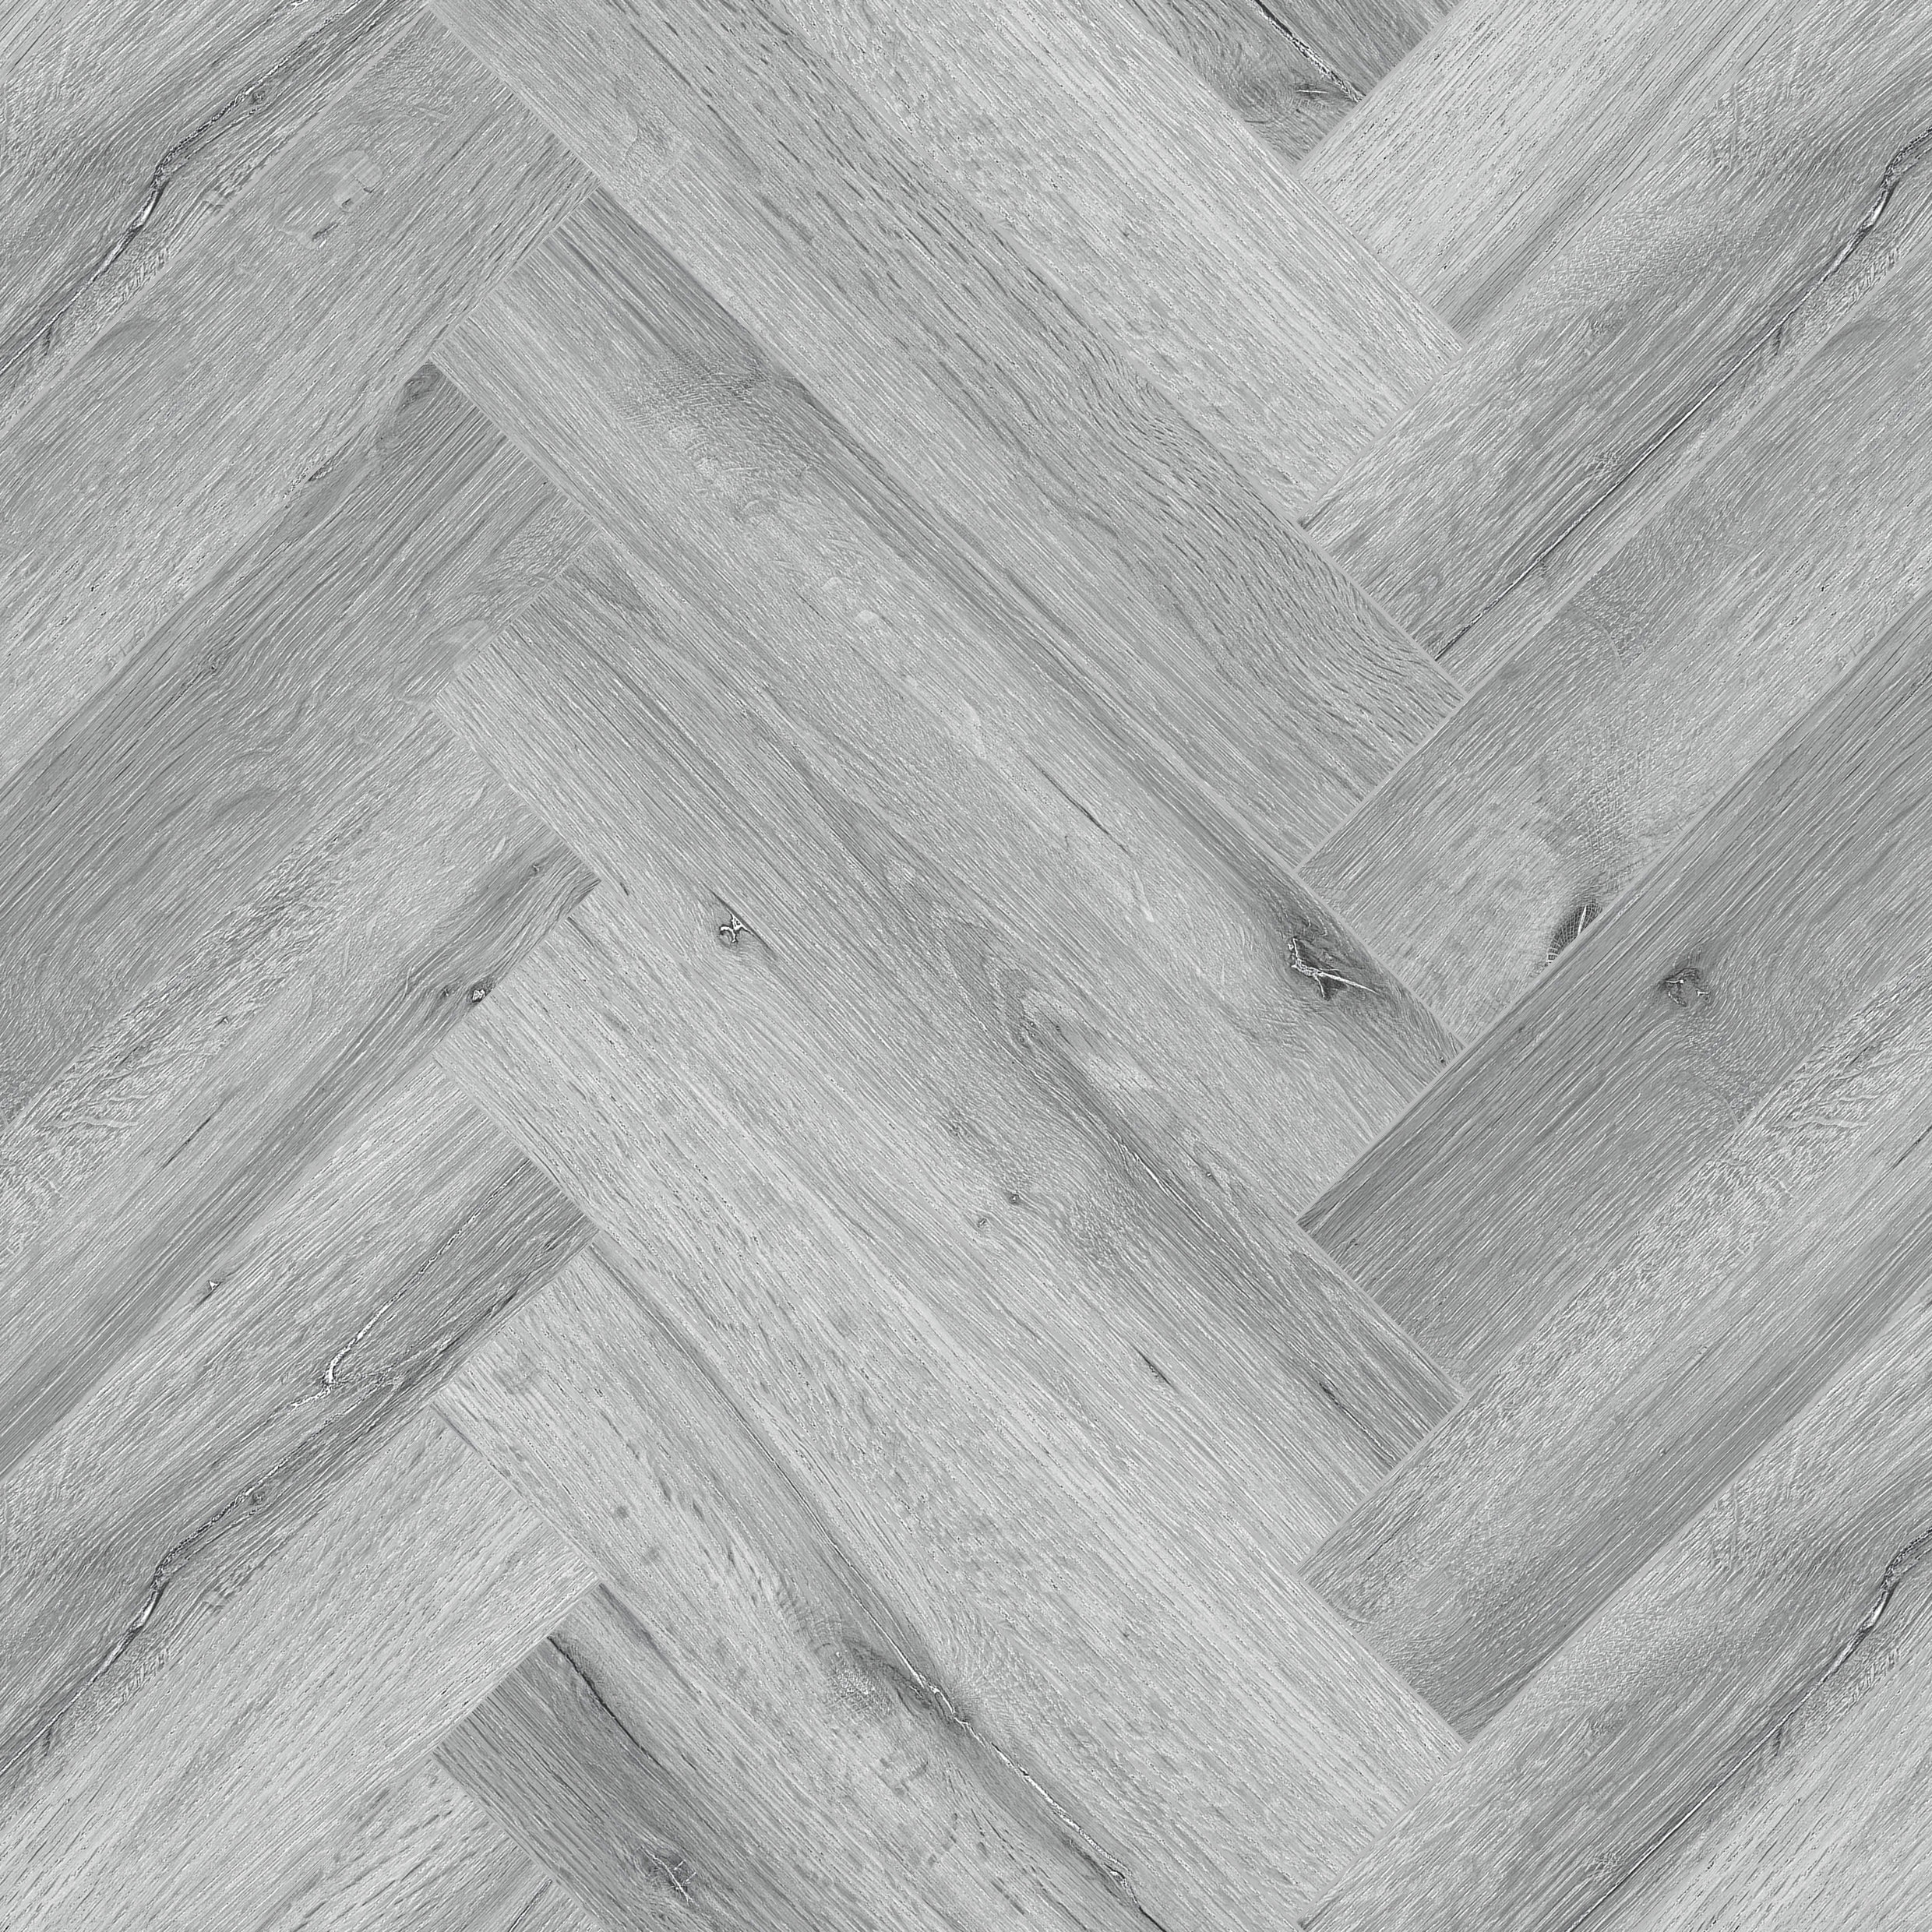 Image of Carisbrooke Silver Oak Herringbone SPC Flooring with Integrated Underlay - 2.22m2